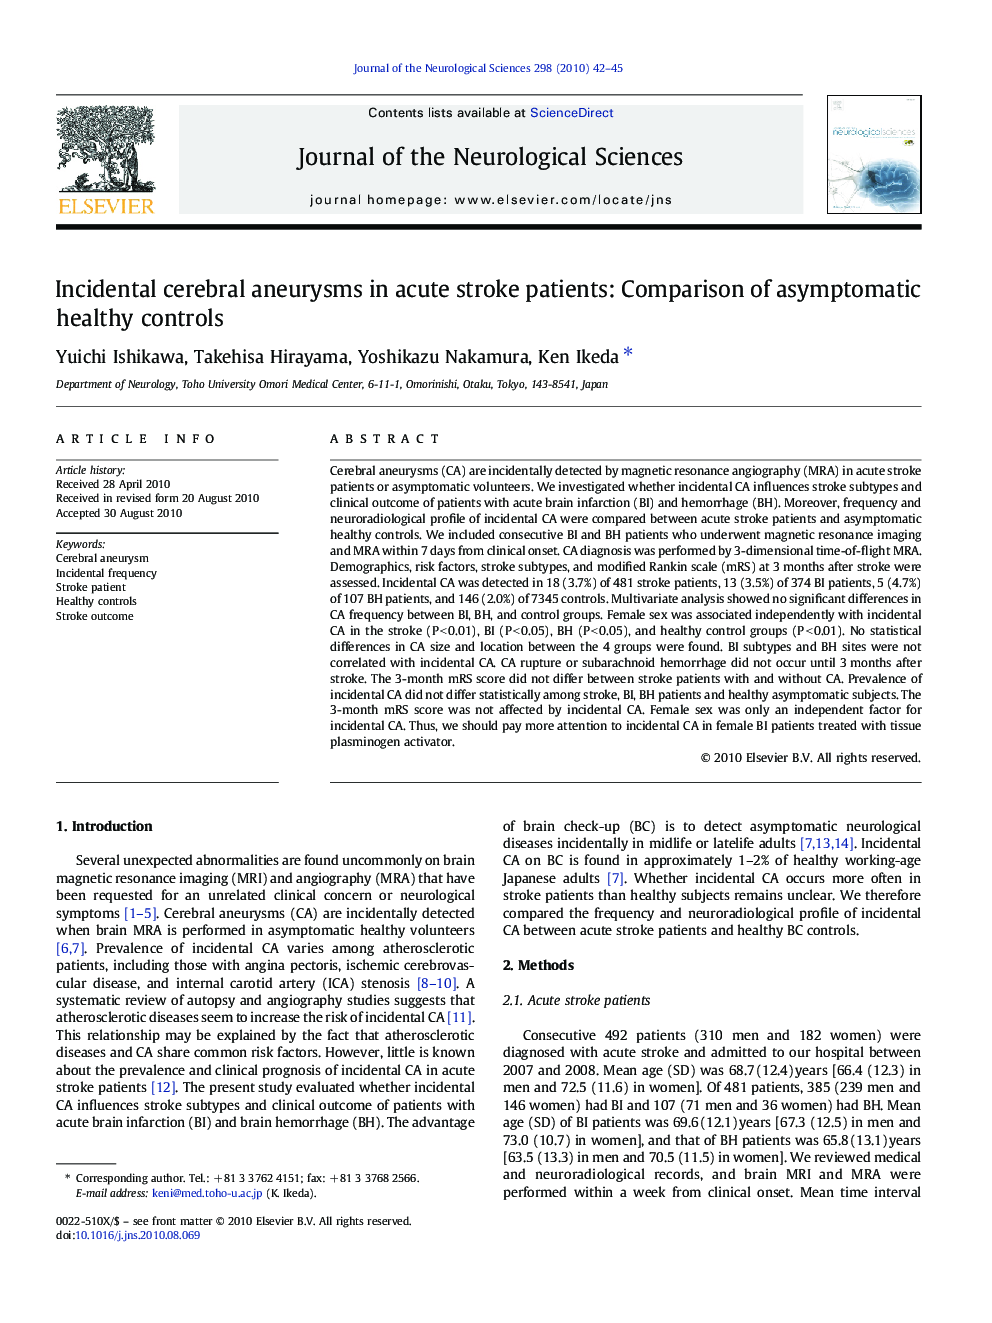 Incidental cerebral aneurysms in acute stroke patients: Comparison of asymptomatic healthy controls